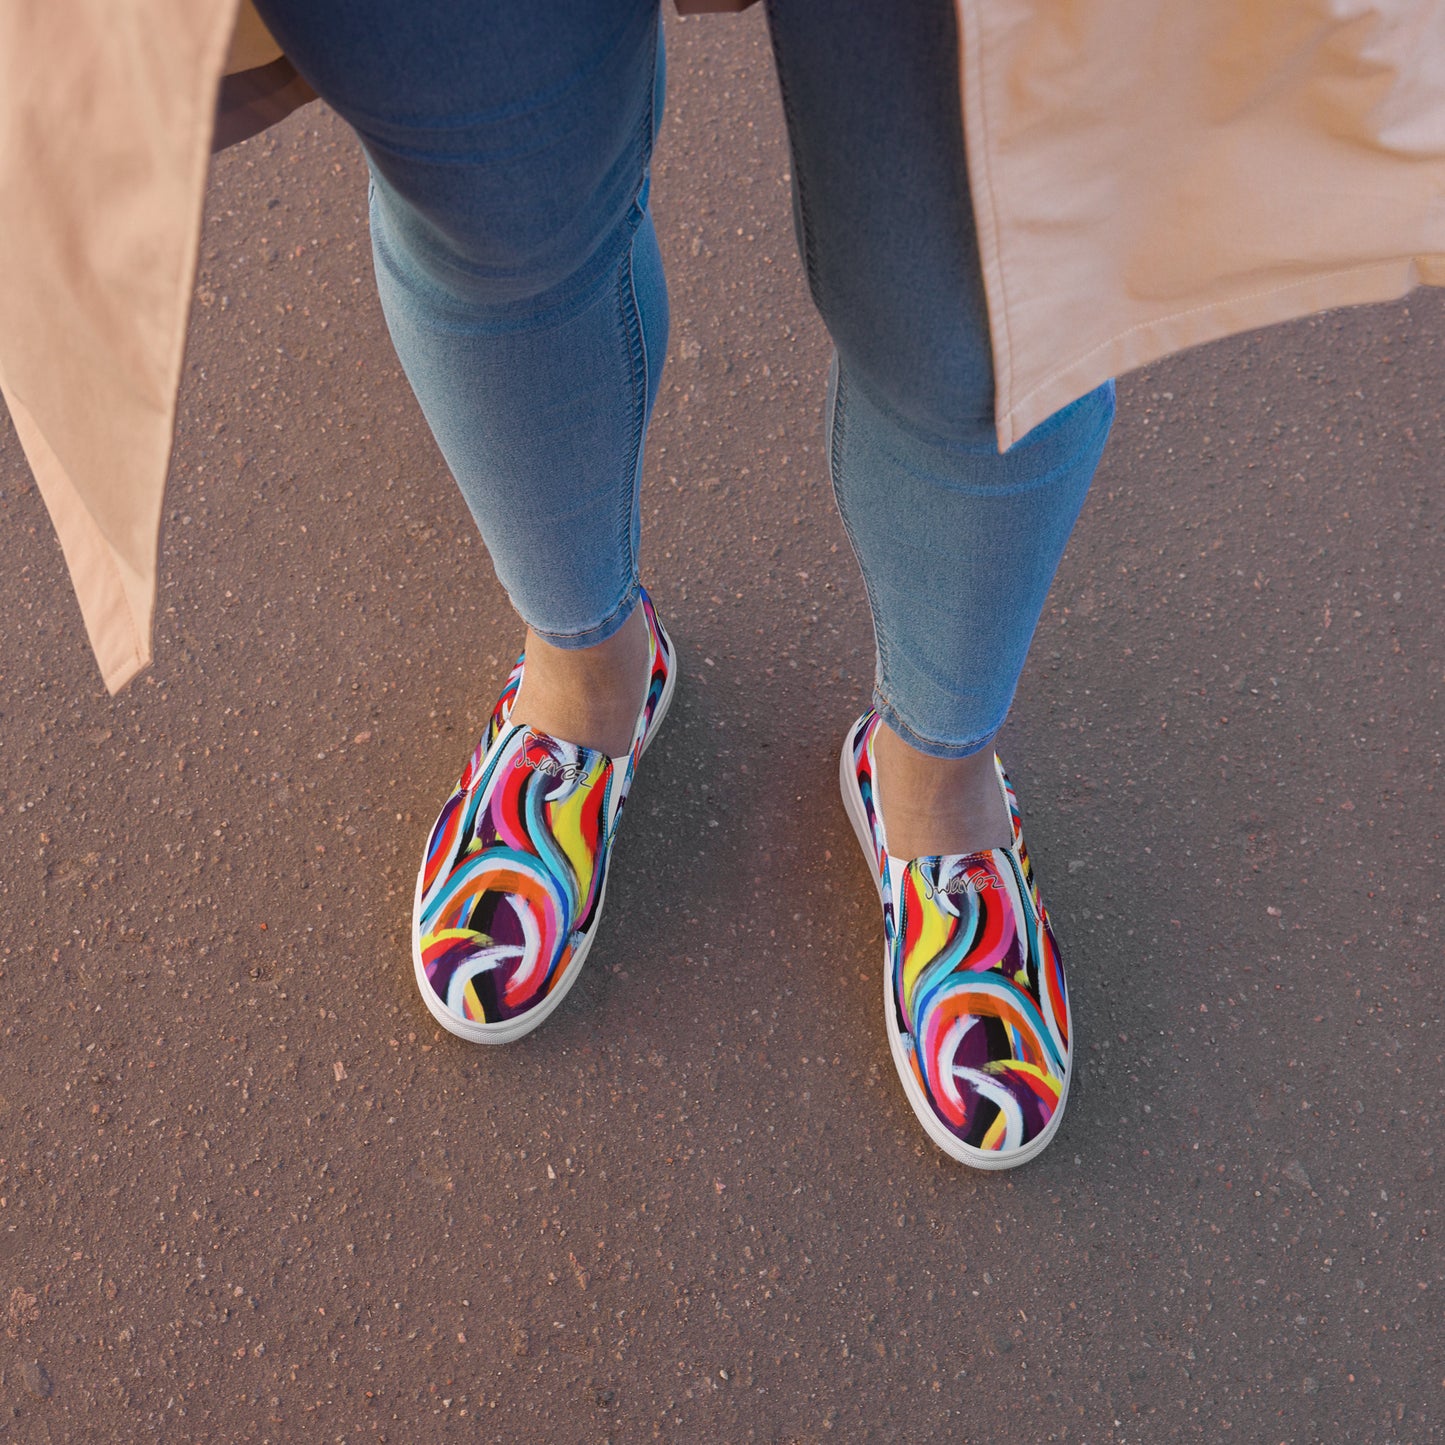 Women’s slip-on canvas shoes - Multi-color swirls